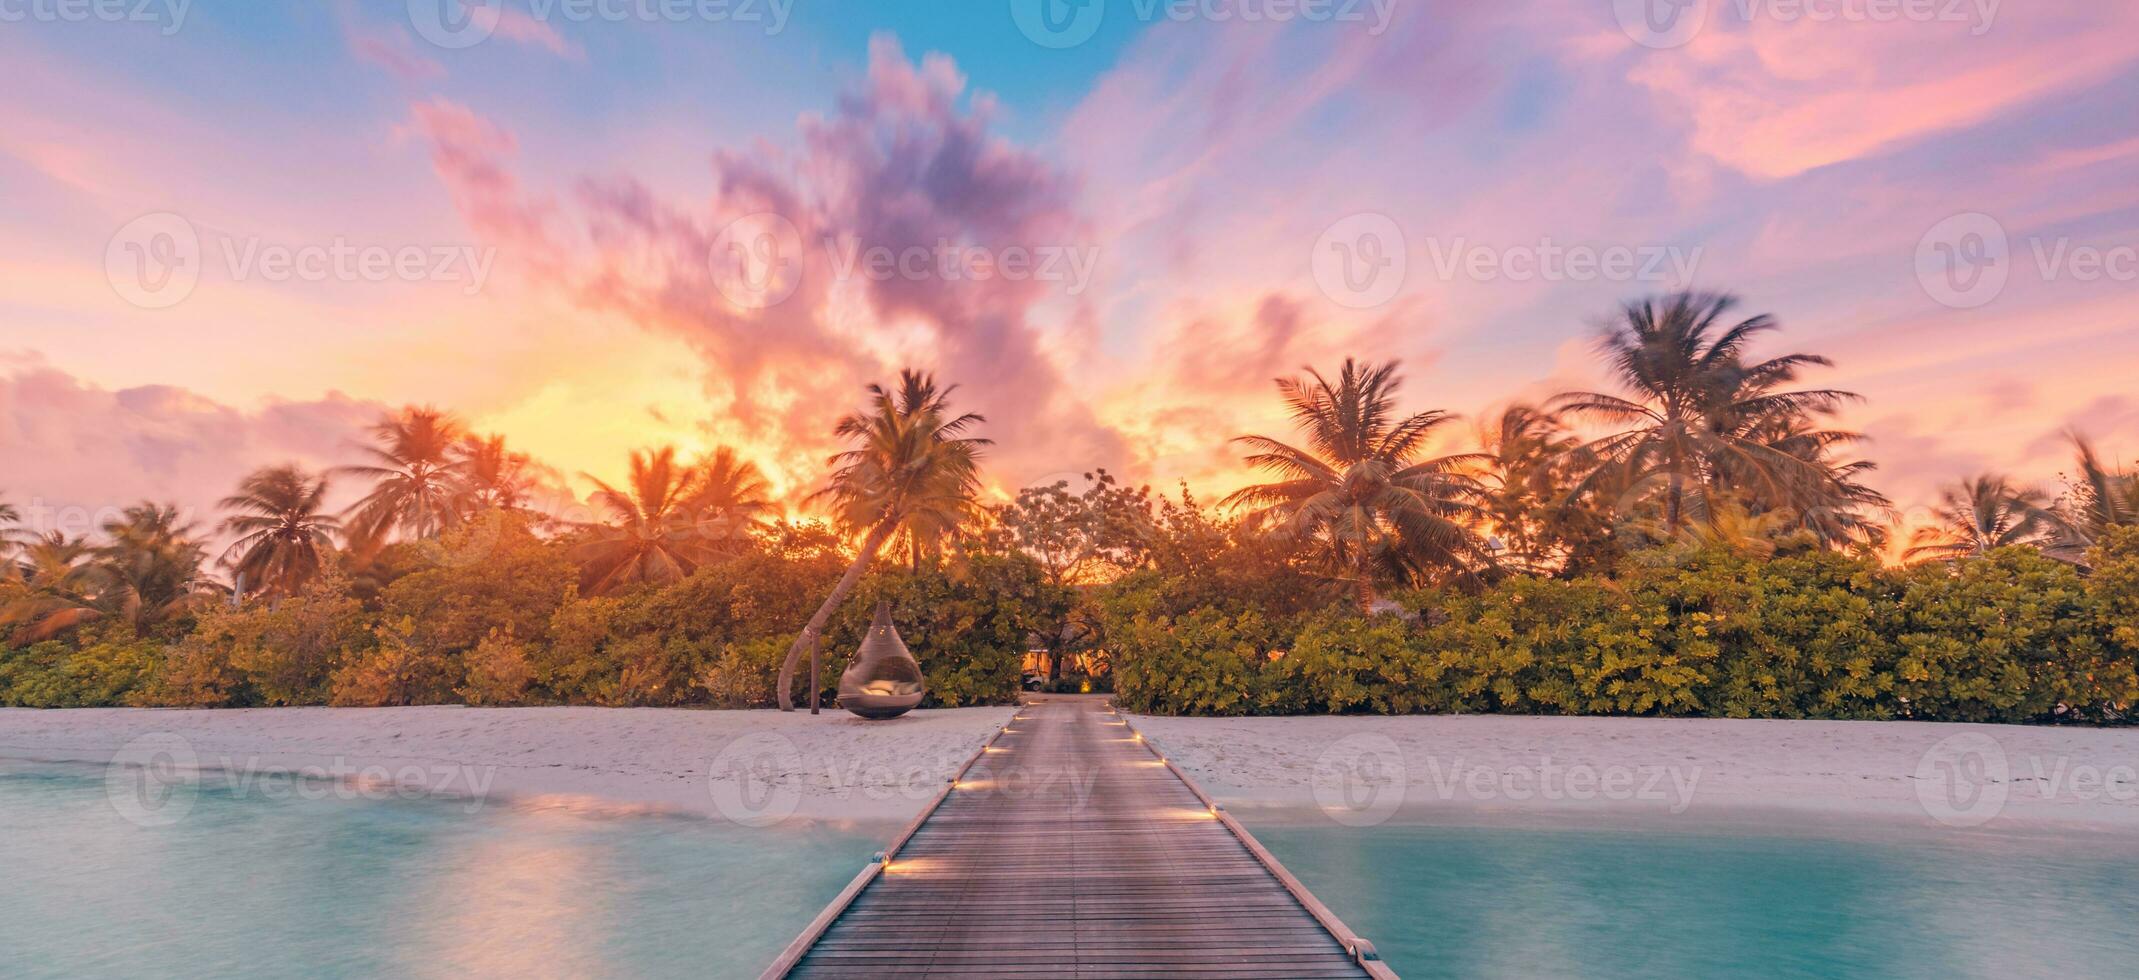 verbazingwekkend strand landschap. mooi Maldiven zonsondergang zeegezicht visie. horizon kleurrijk zonsondergang zee lucht wolken over- pier traject lichten. rustig eiland lagune, toerisme reizen achtergrond. exotisch vakantie foto